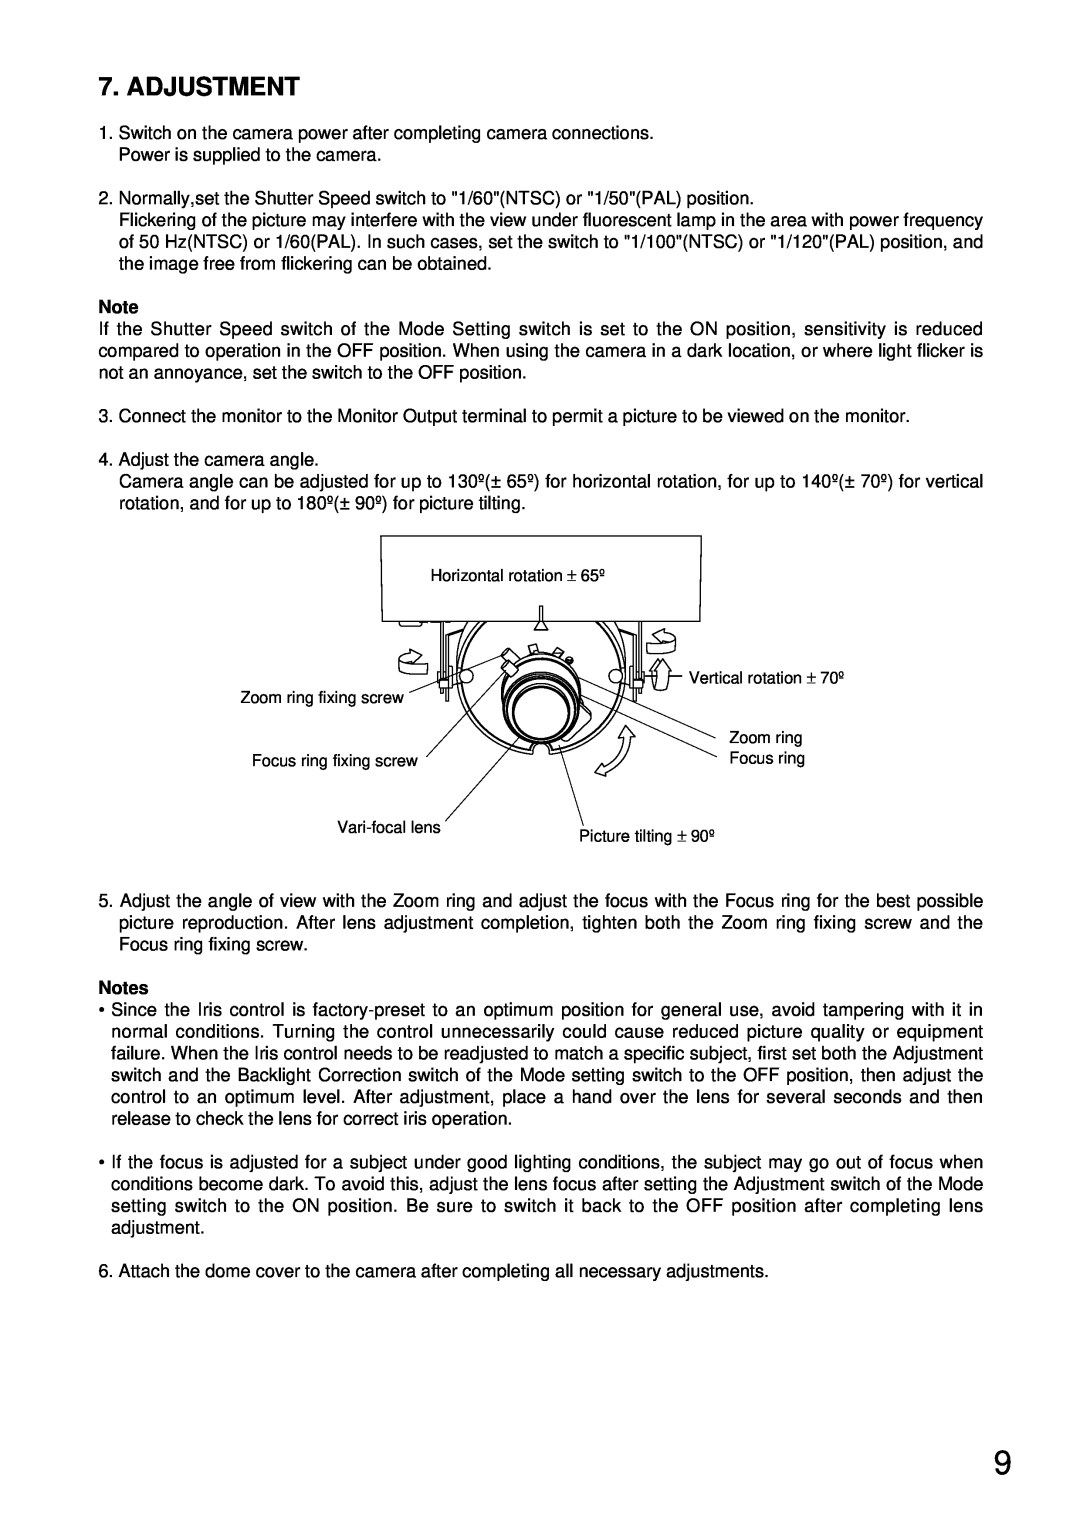 TOA Electronics C-CV24-2 NTSC instruction manual Adjustment 